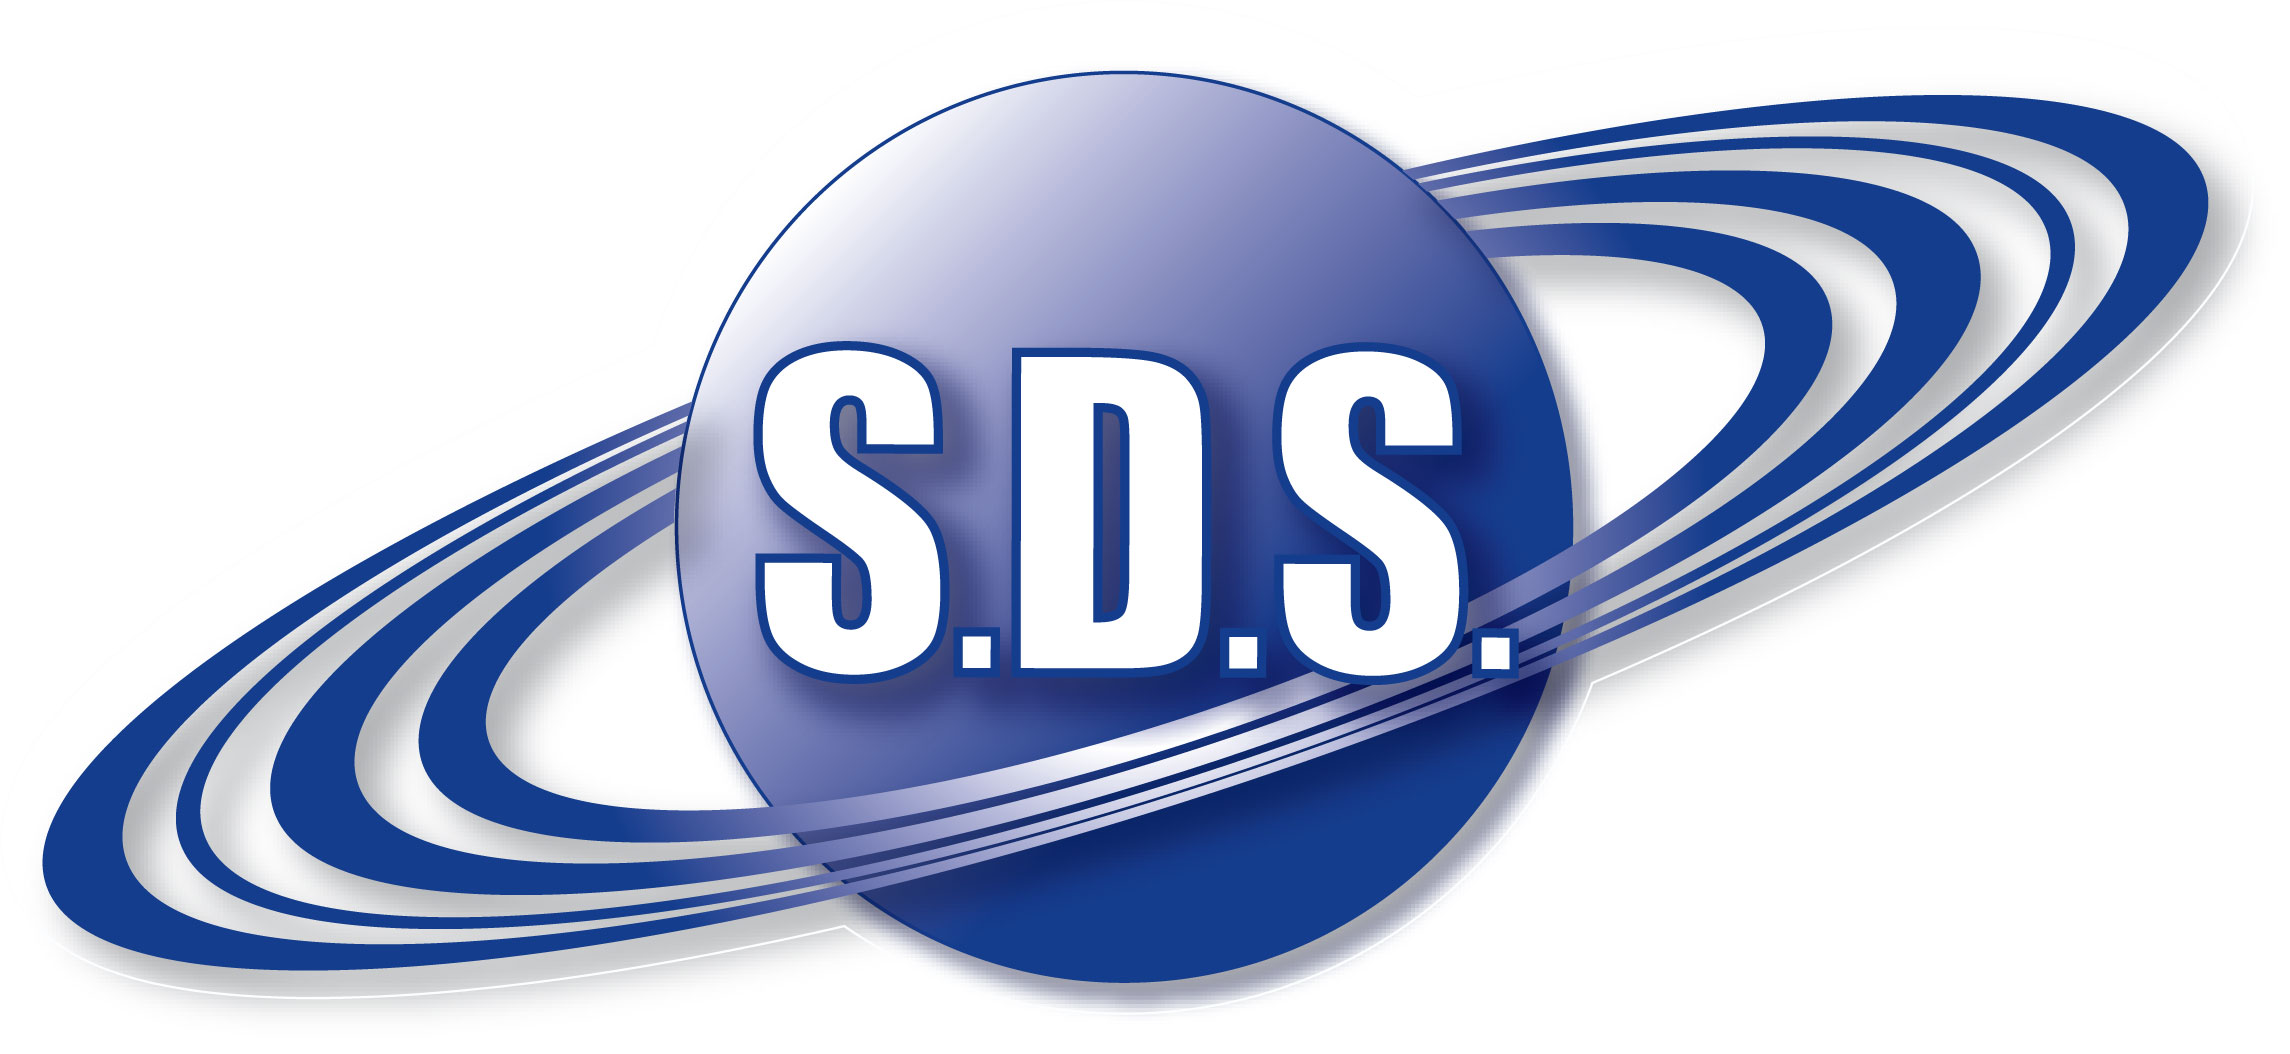 Saturn Distribution Services Ltd